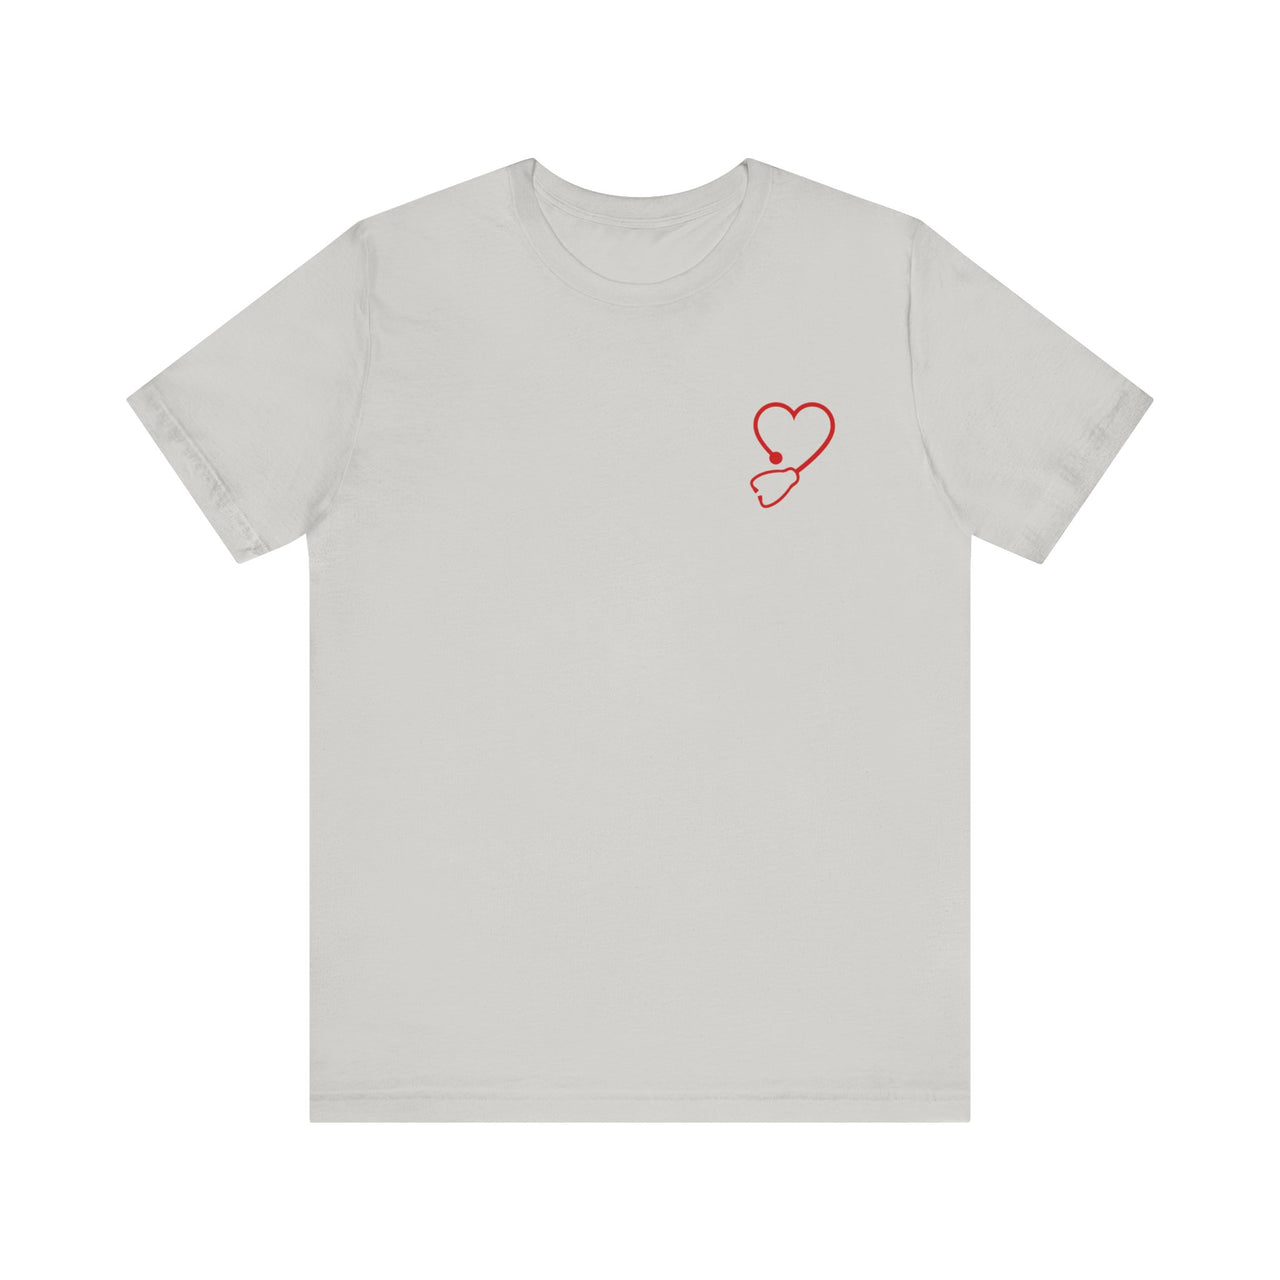 Camiseta Unisex "De corazón" , camiseta para profesionales médicos, camiseta medicina